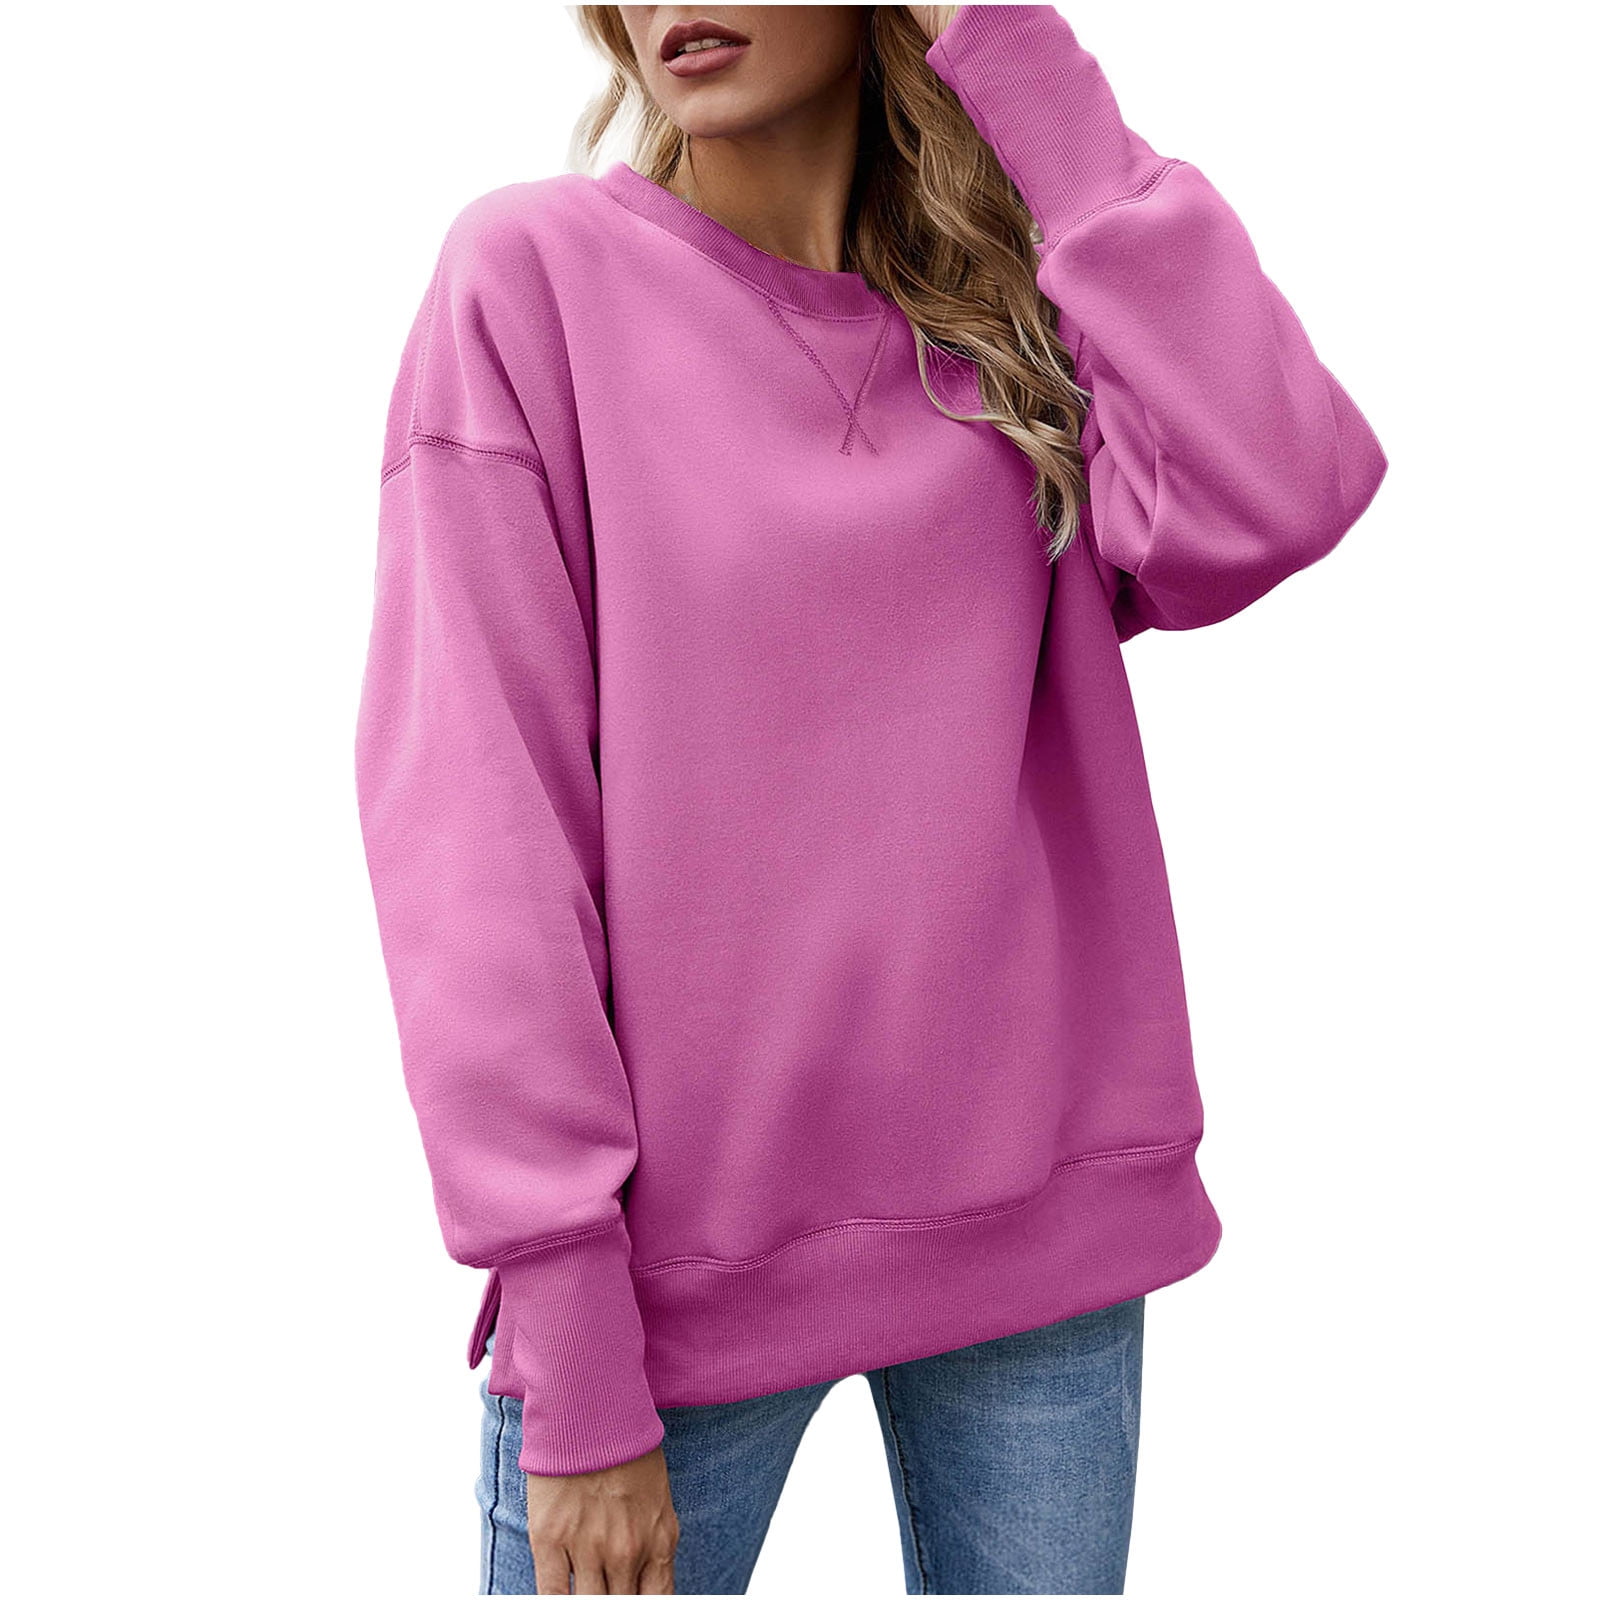 DEYIOU Concert Sweatshirt Fashion Women's Hoodie Casual Long - Import It All